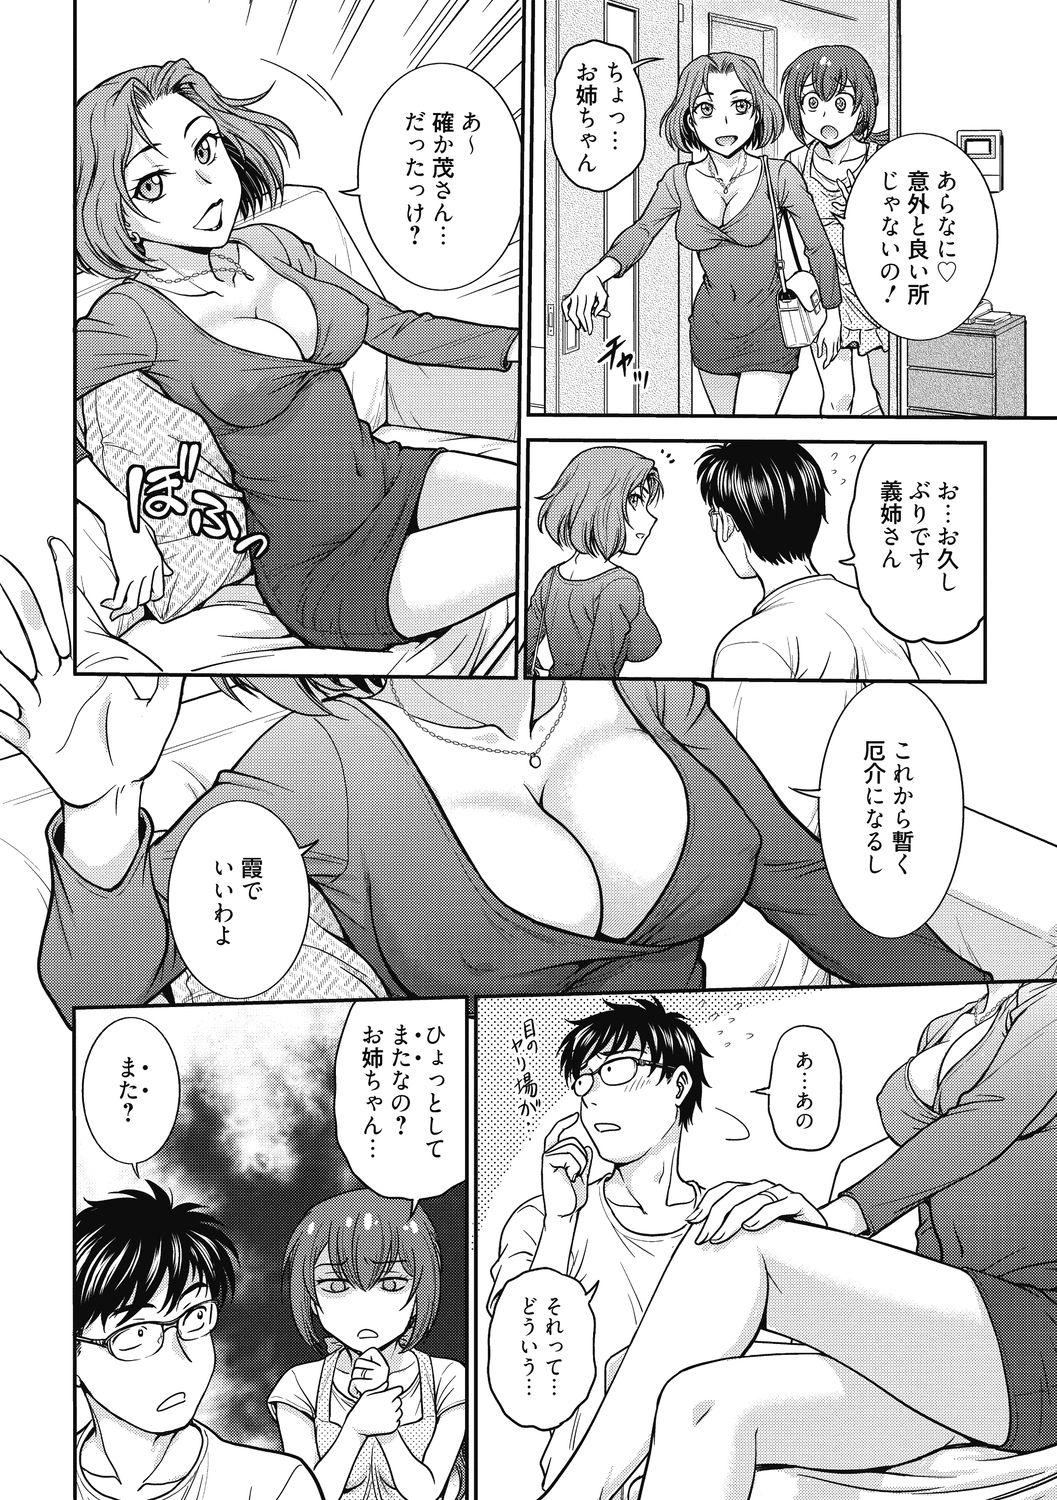 Kanojo no Shitagi o Nusundara... - I tried to steal her underwear... 97